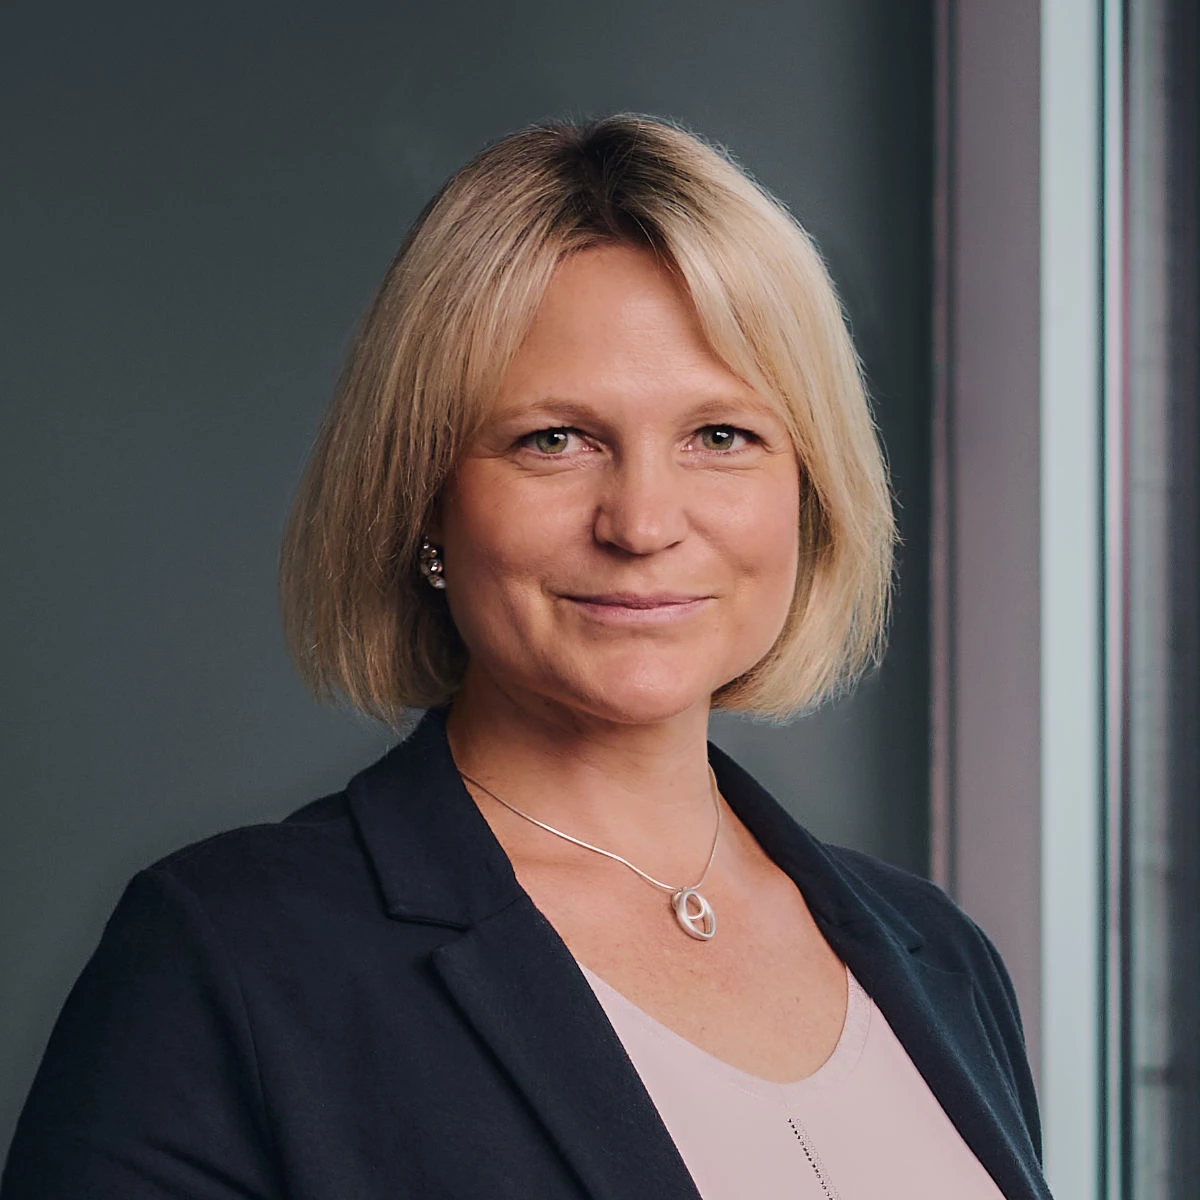 Annette Kröger, CEO, Europe du Nord et centrale, Allianz Real Estate